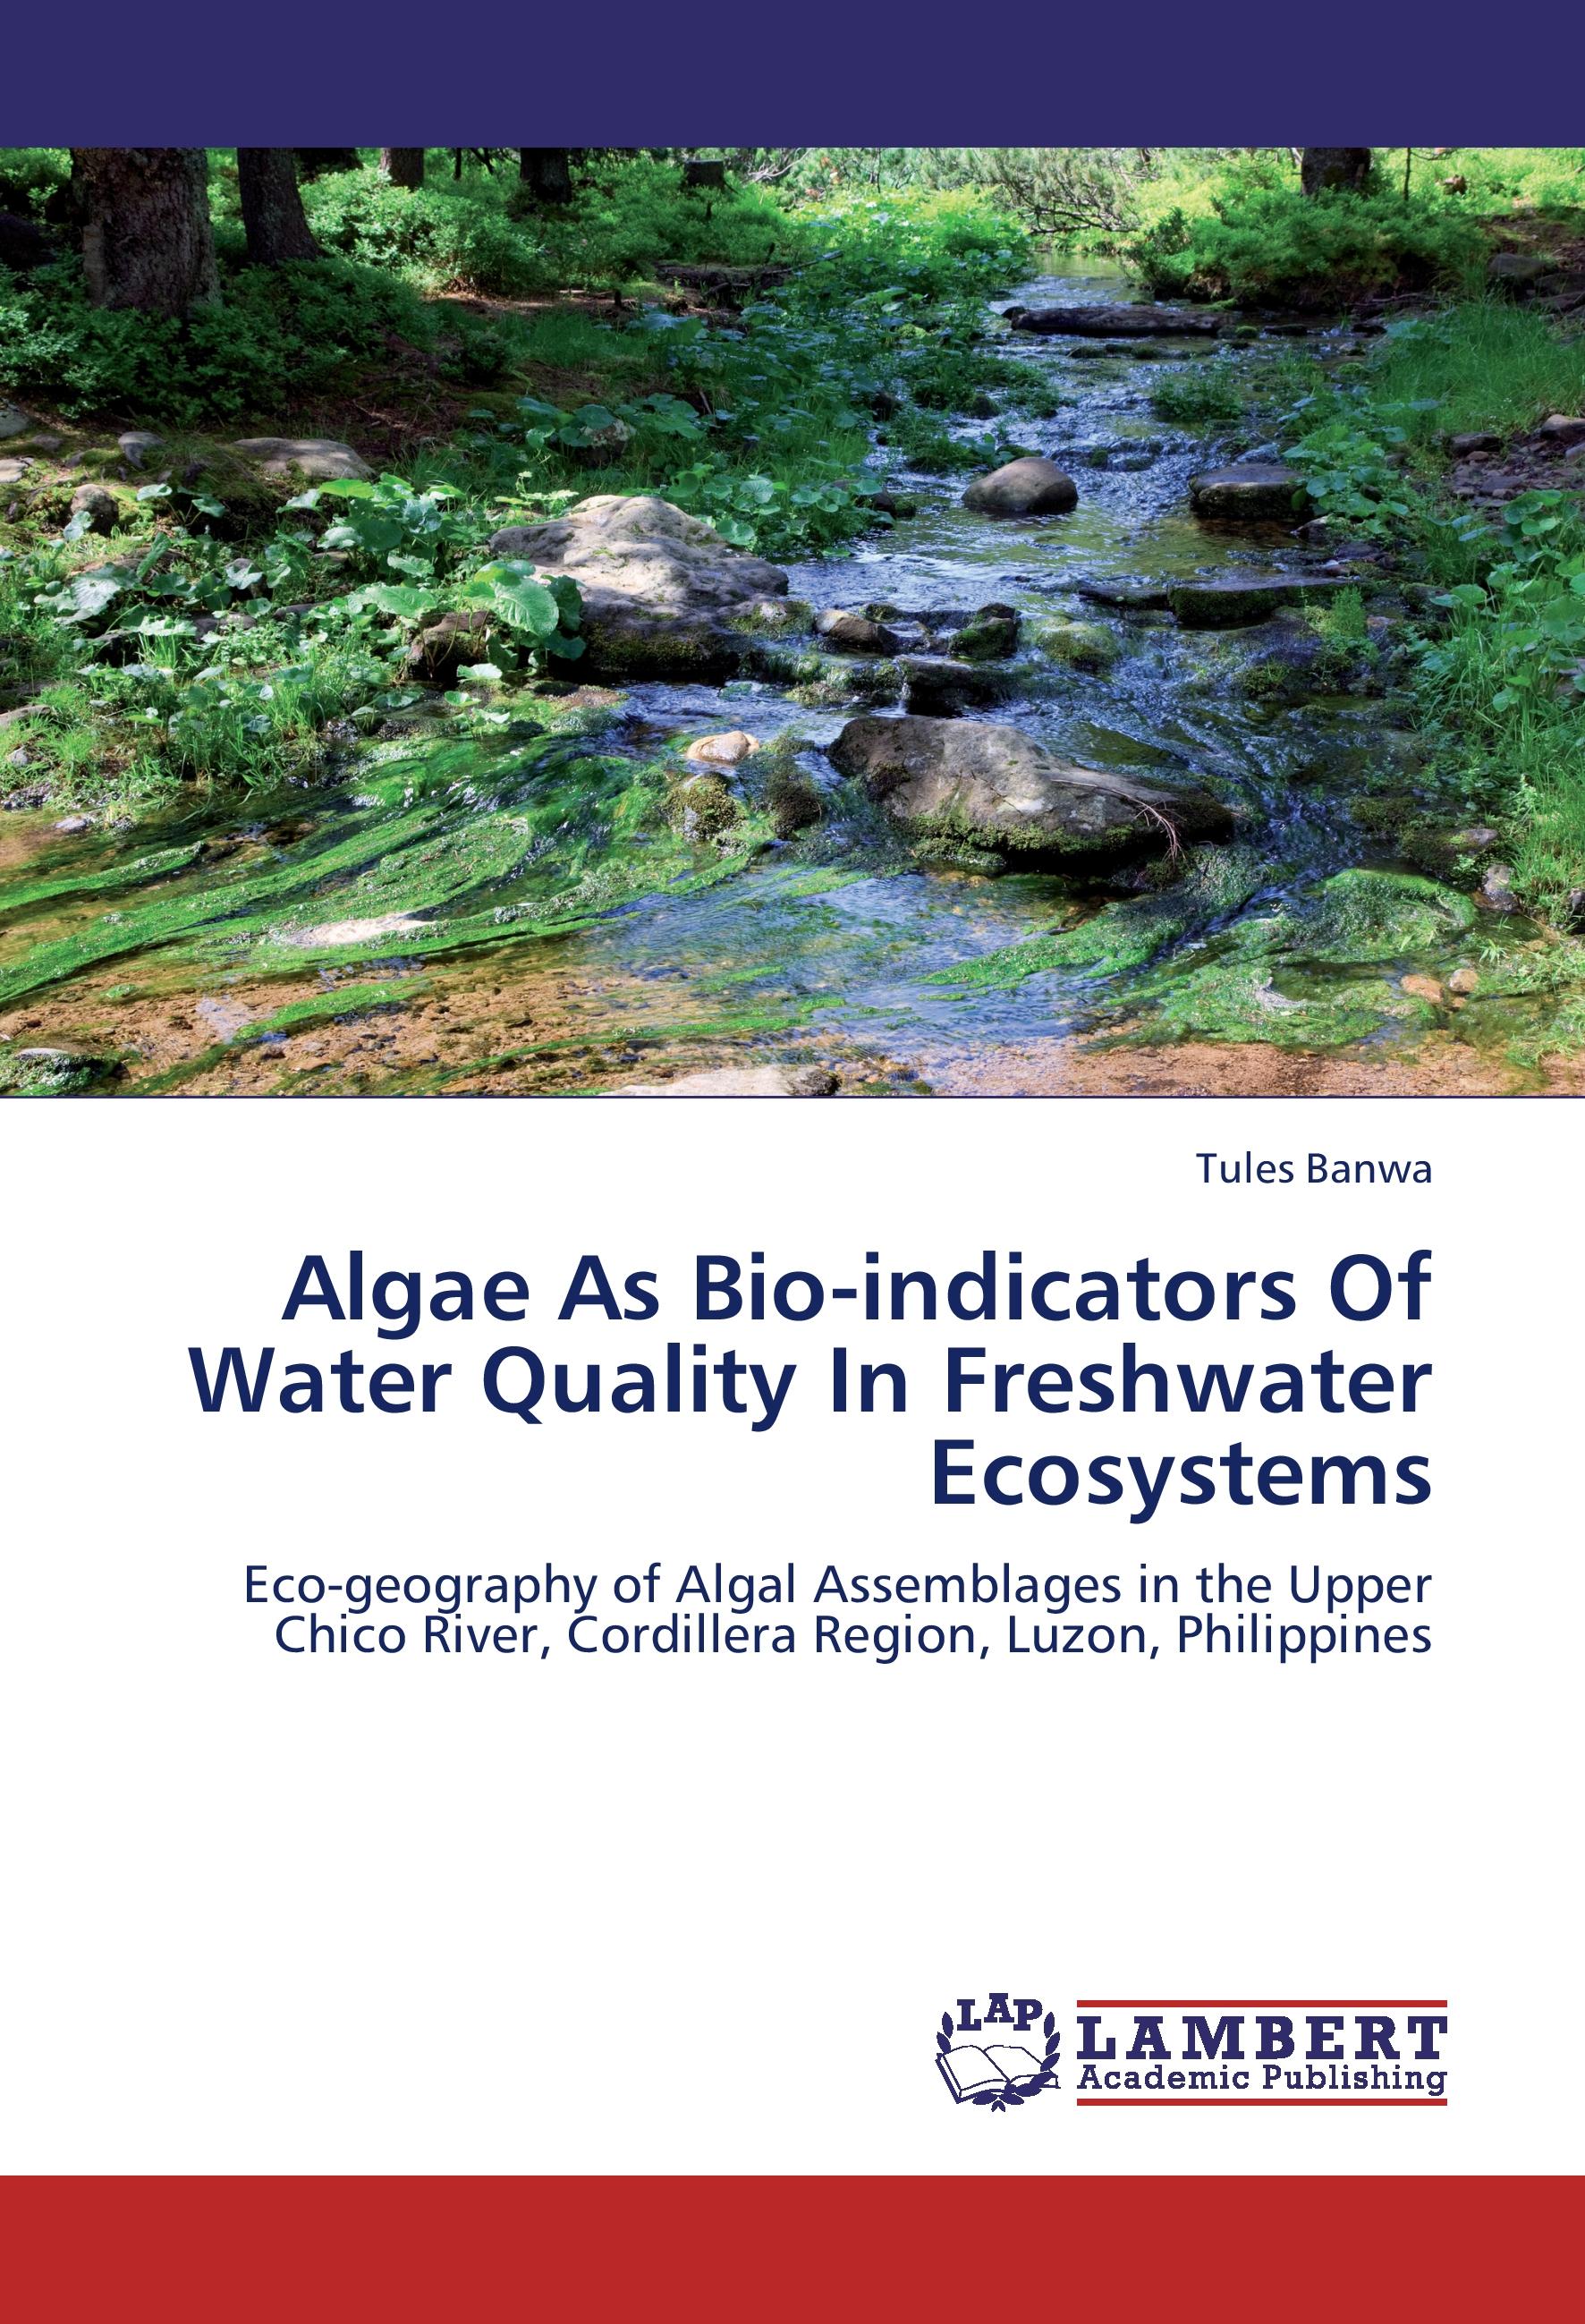 Algae As Bio-indicators Of Water Quality In Freshwater Ecosystems - Tules Banwa